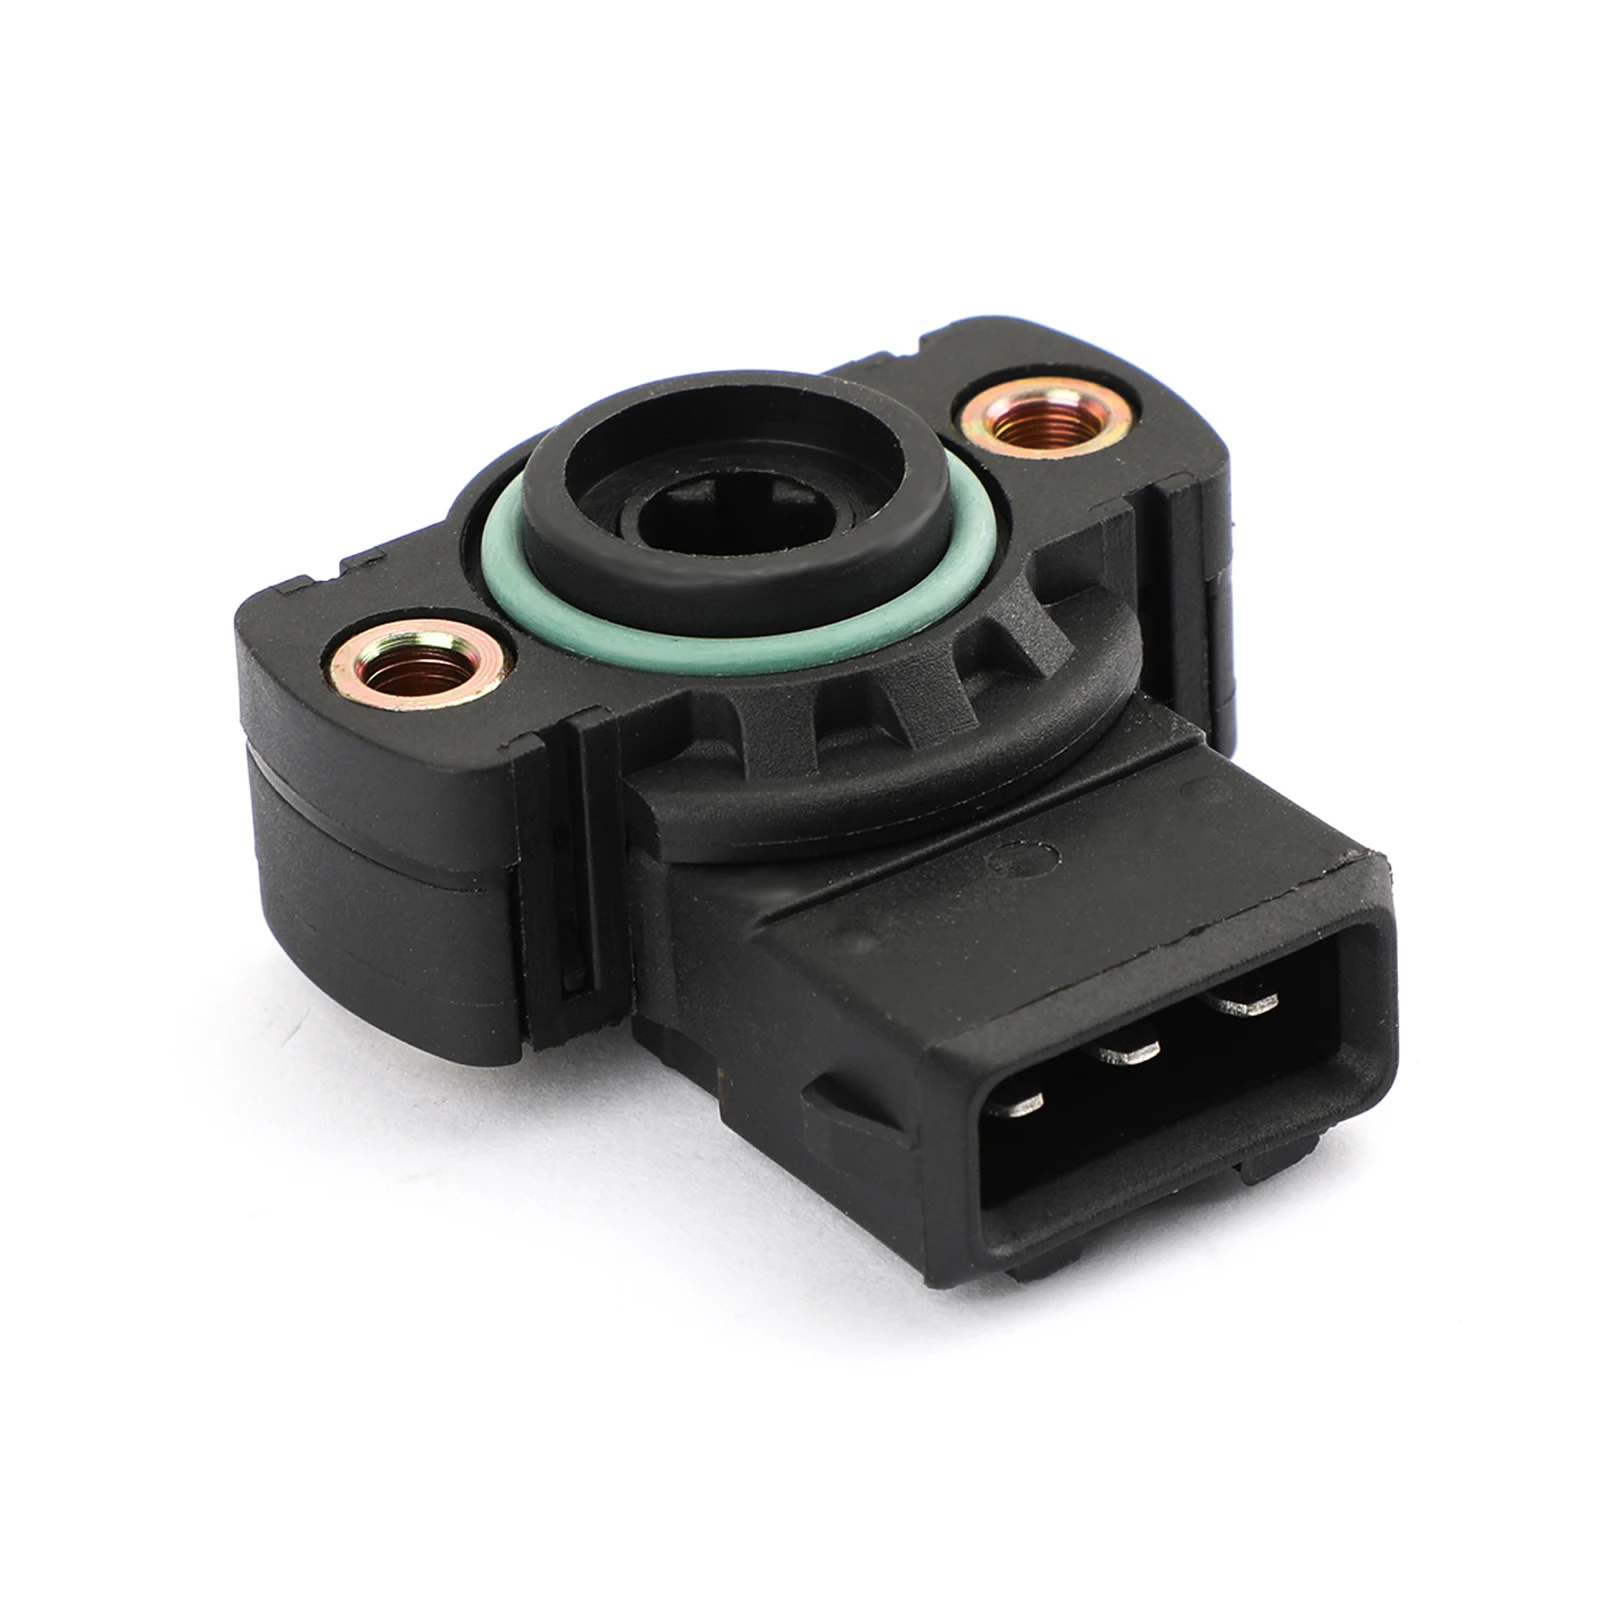 

Areyourshop For Golf MK3 New Throttle Position Sensor For seat, Black